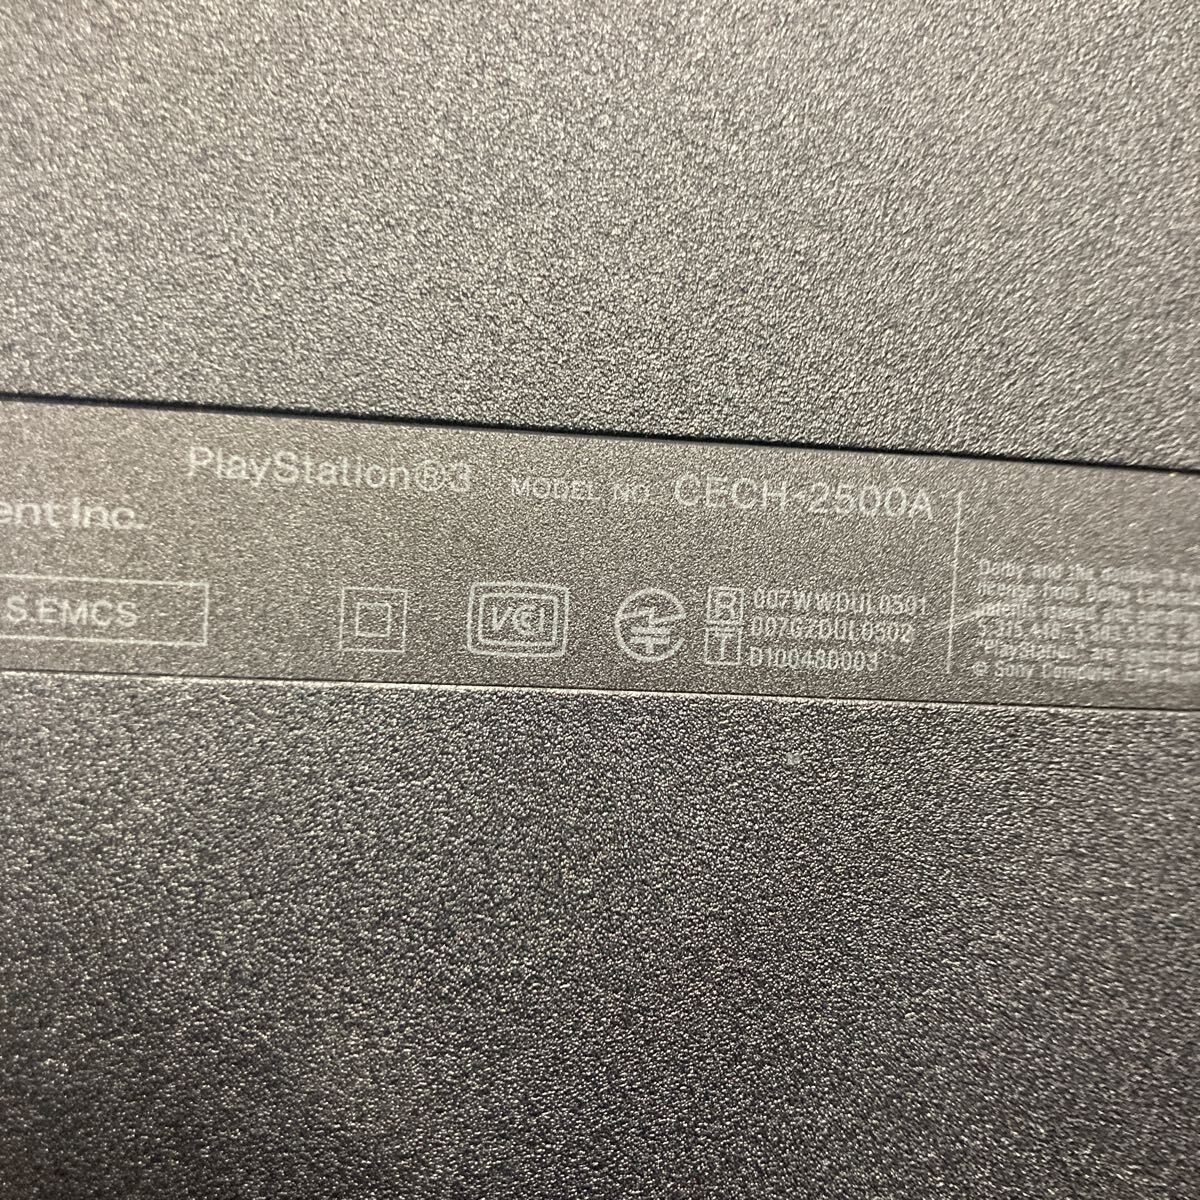 。SONY PlayStation3 CECH-2500A ブラック コントローラー、ケーブル付き_画像8